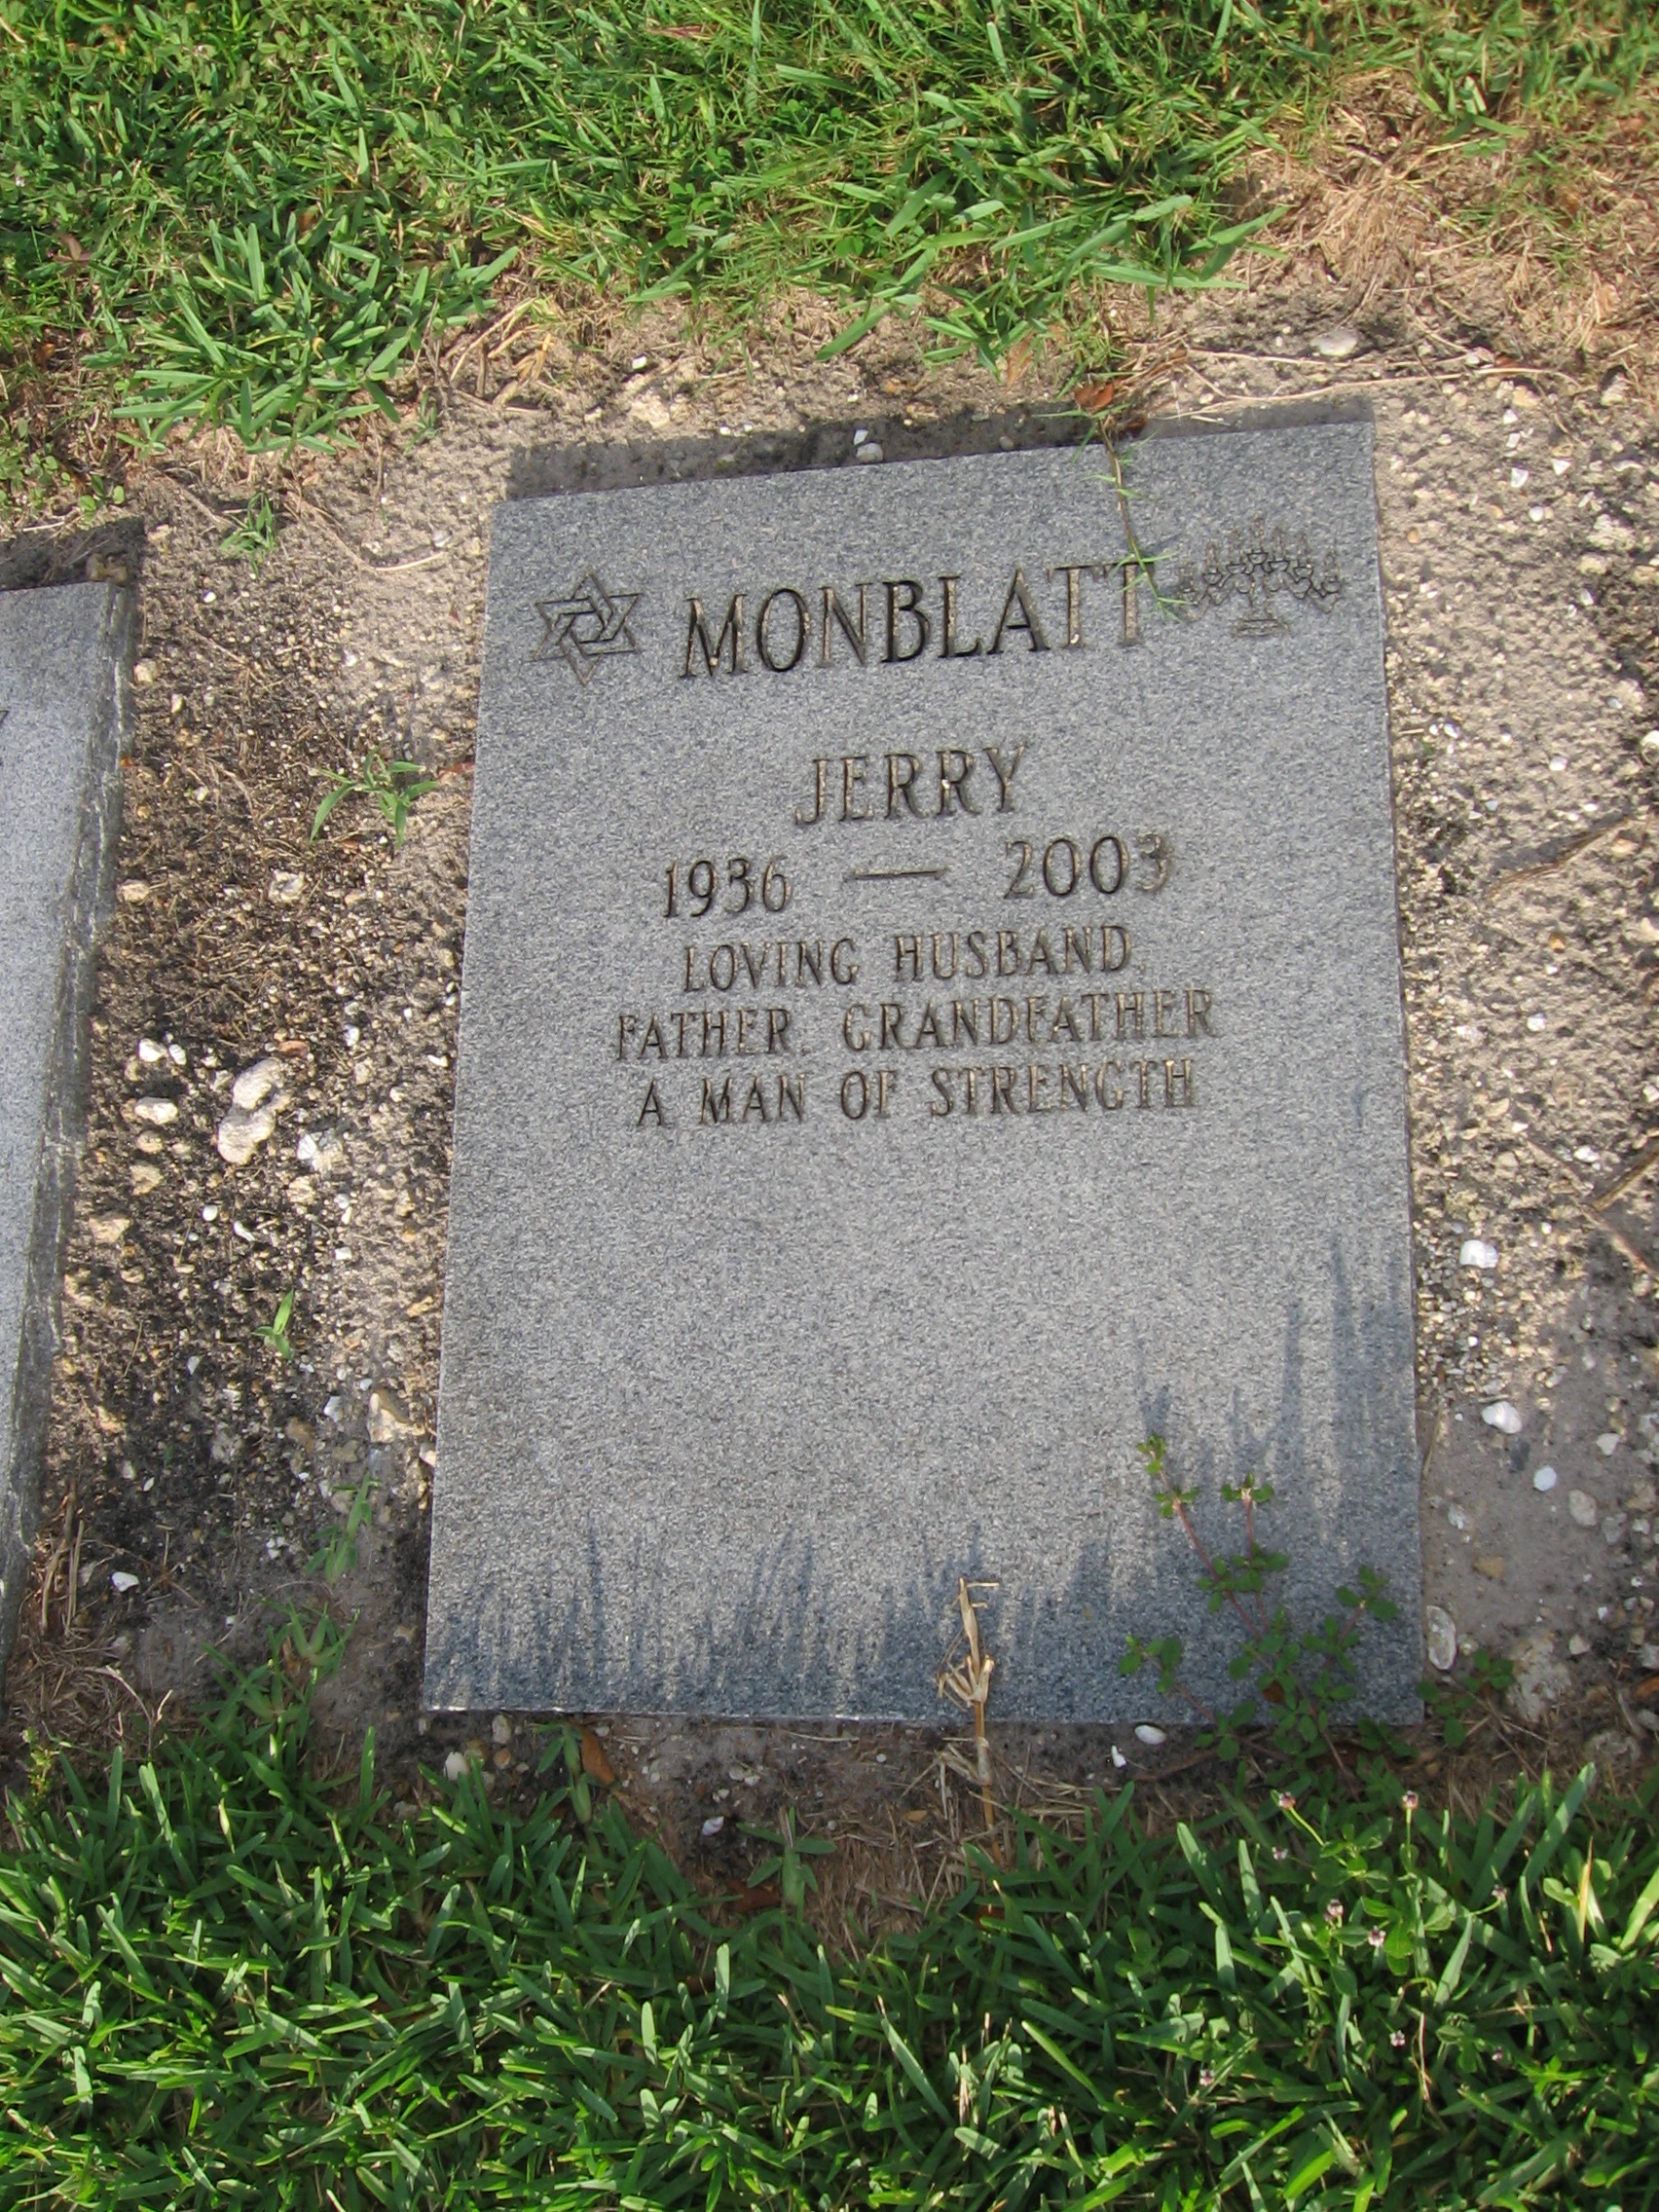 Jerry Monblatt